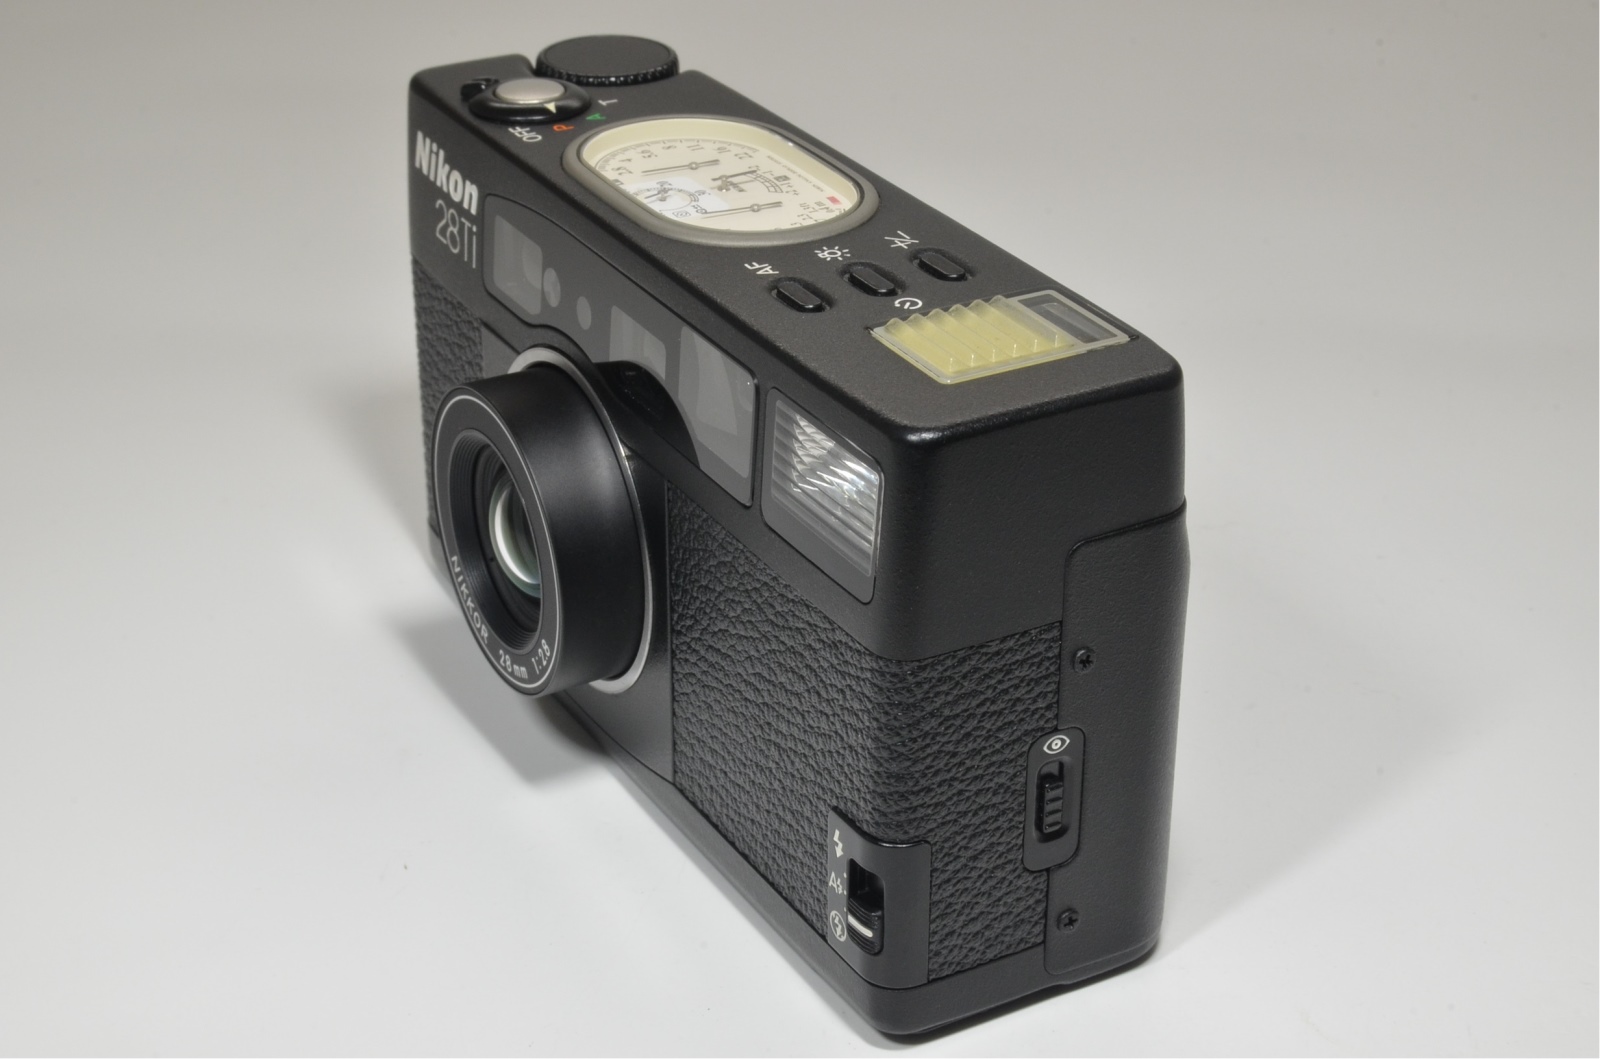 nikon 28ti in boxed point & shoot 35mm film camera 28mm f2.8